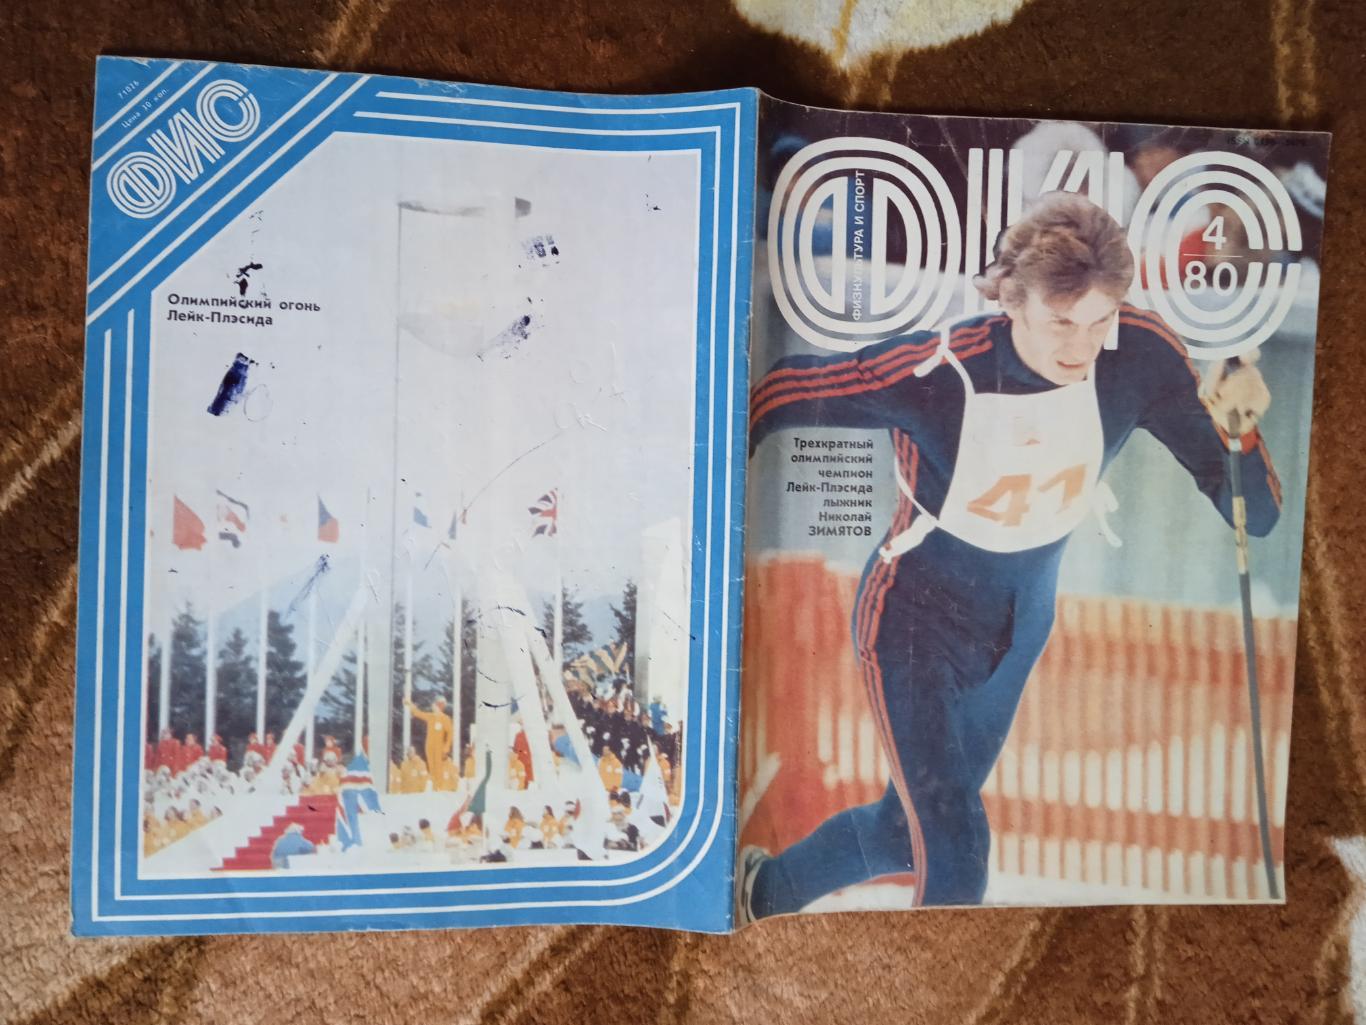 Журнал.Физкультура и спорт № 4 1980 г. (ФиС).Олимпиада 1980.Лейк-Плэсид.США.